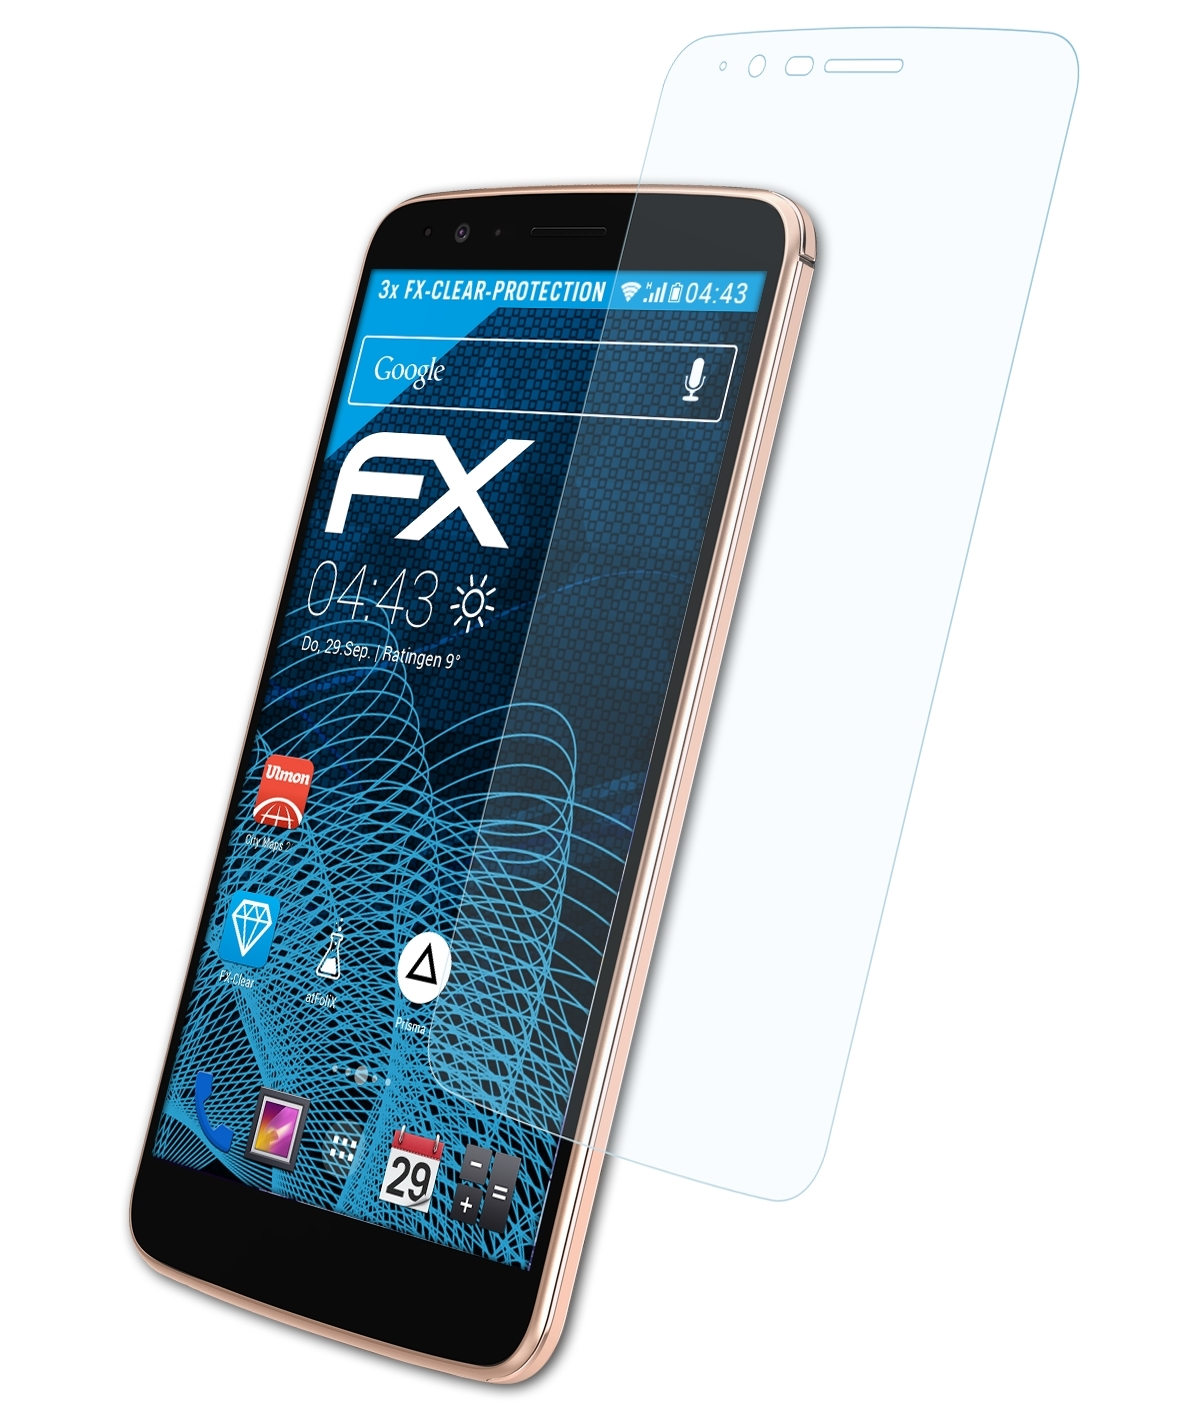 ATFOLIX 3x FX-Clear 3 (LGM400DK)) Displayschutz(für Stylus LG